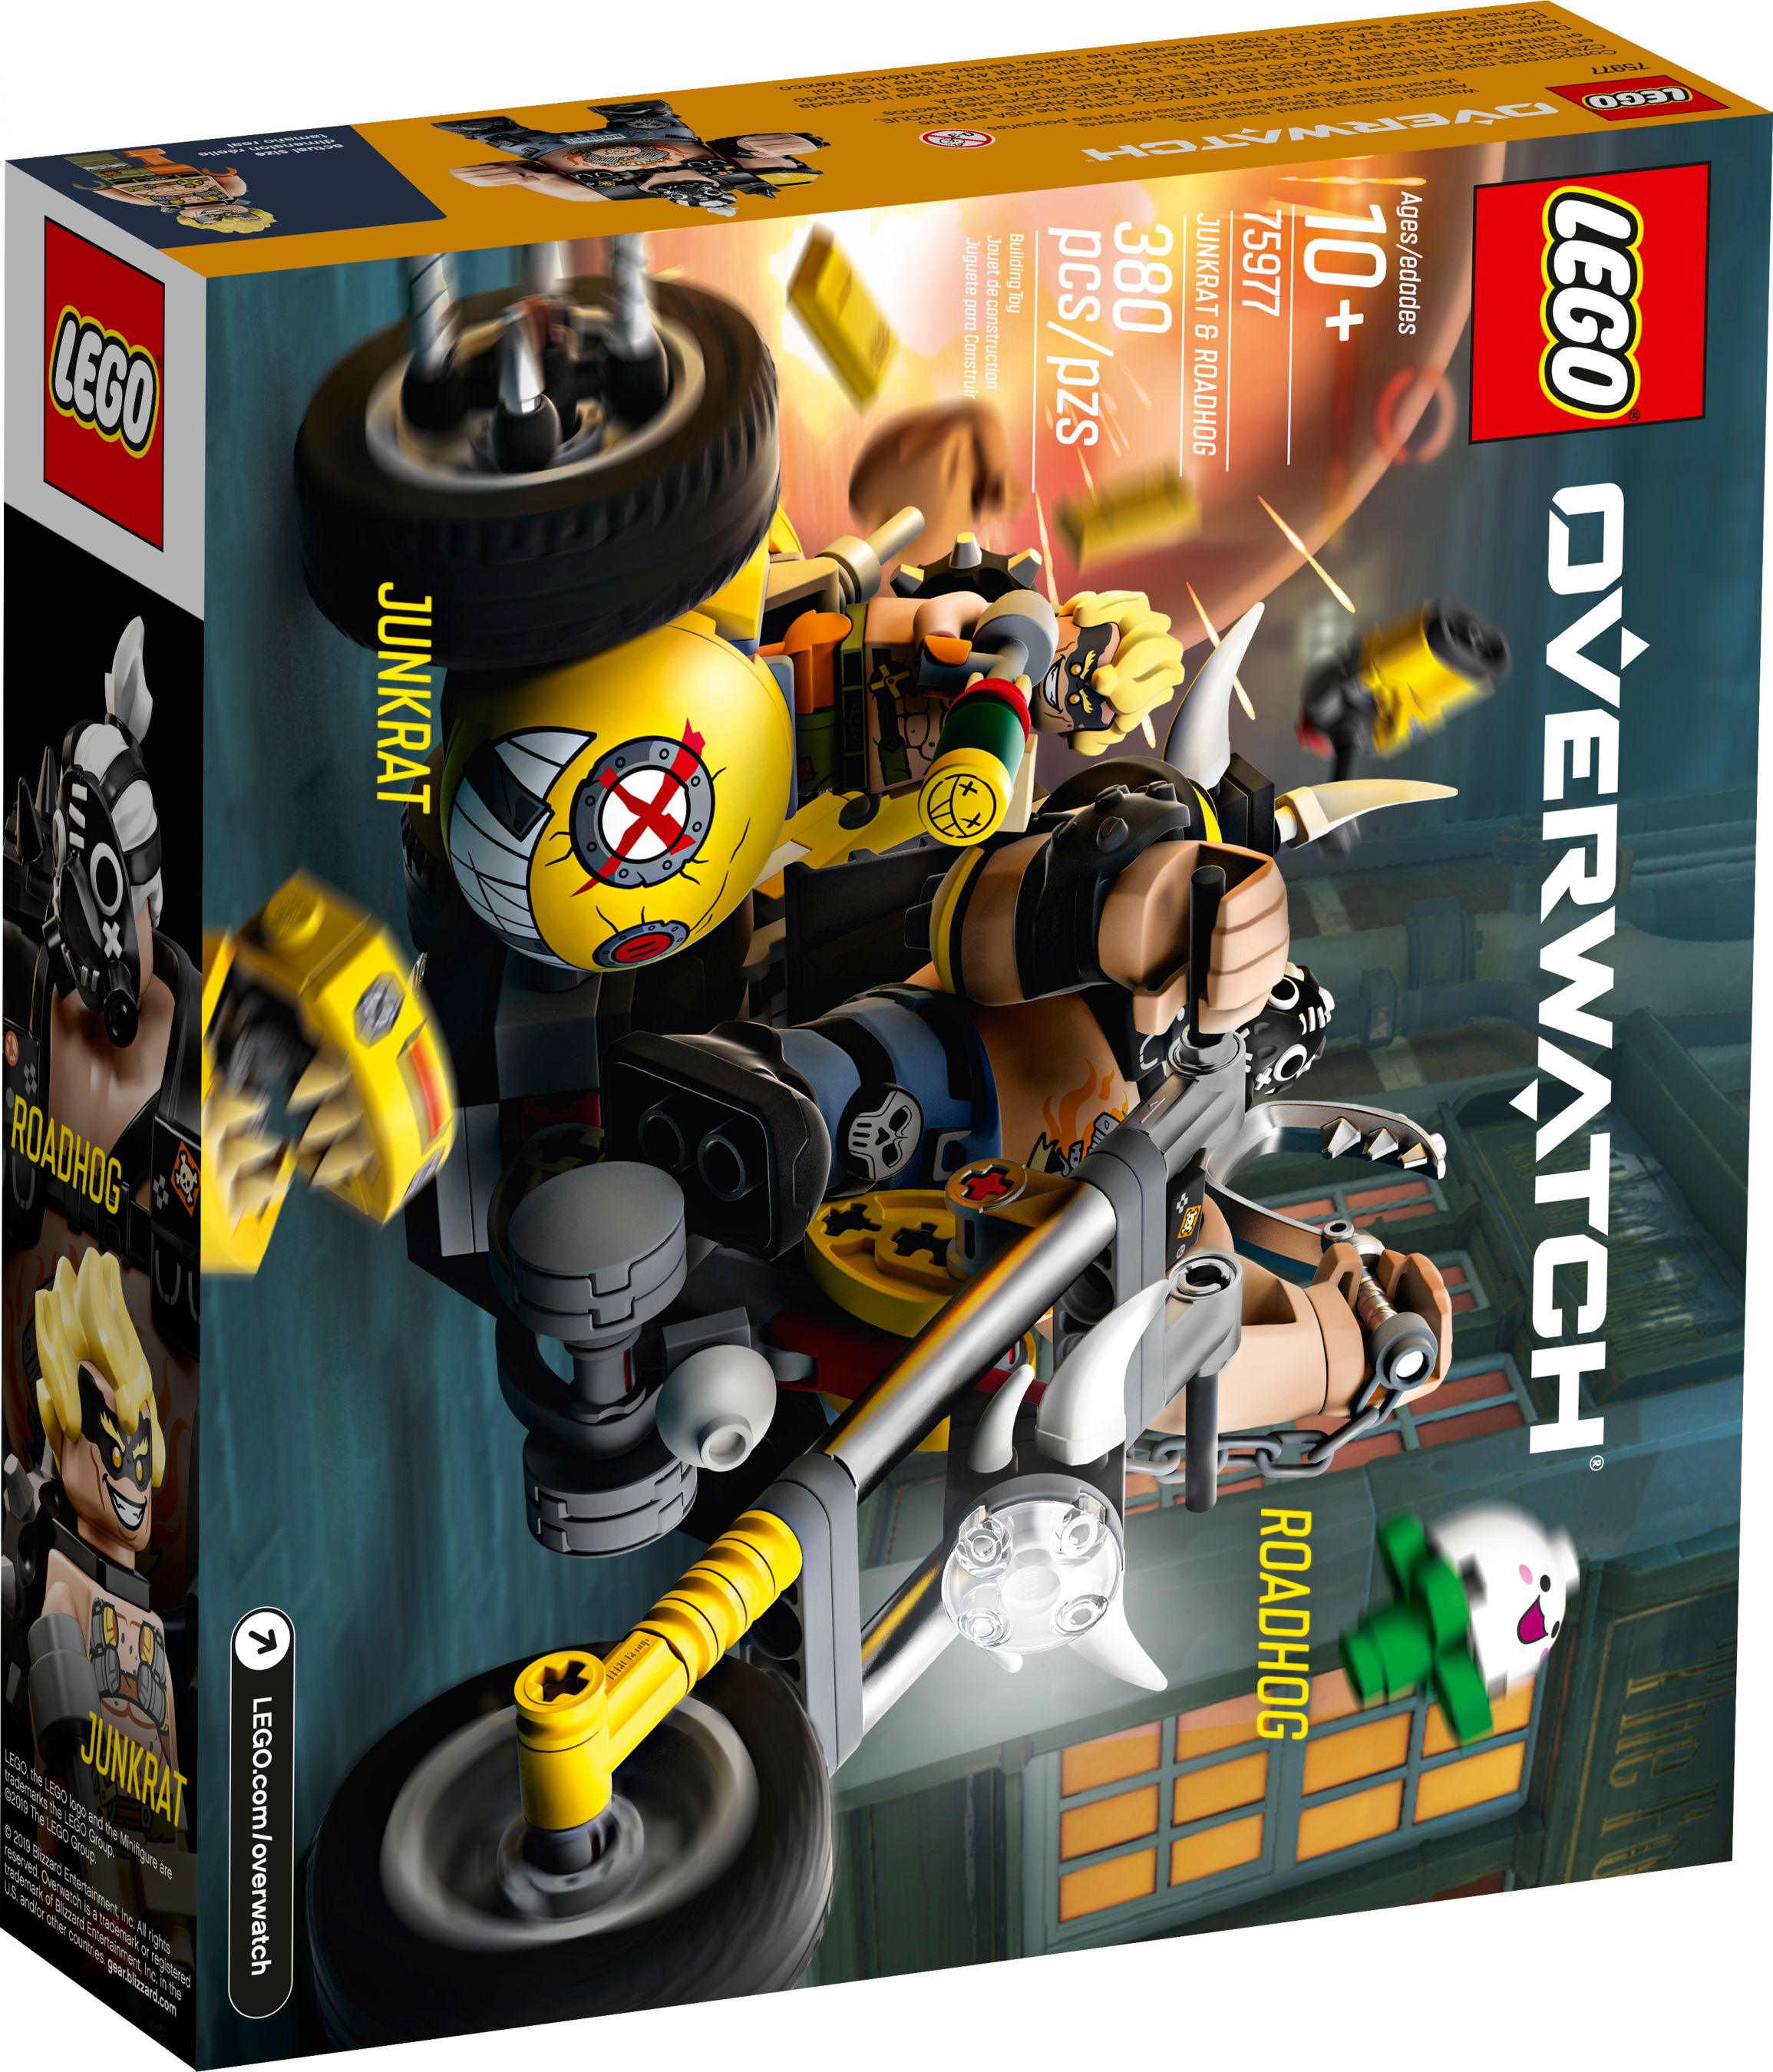 LEGO Overwatch 75977 Junkertown Bike LEGO_75977_alt6.jpg